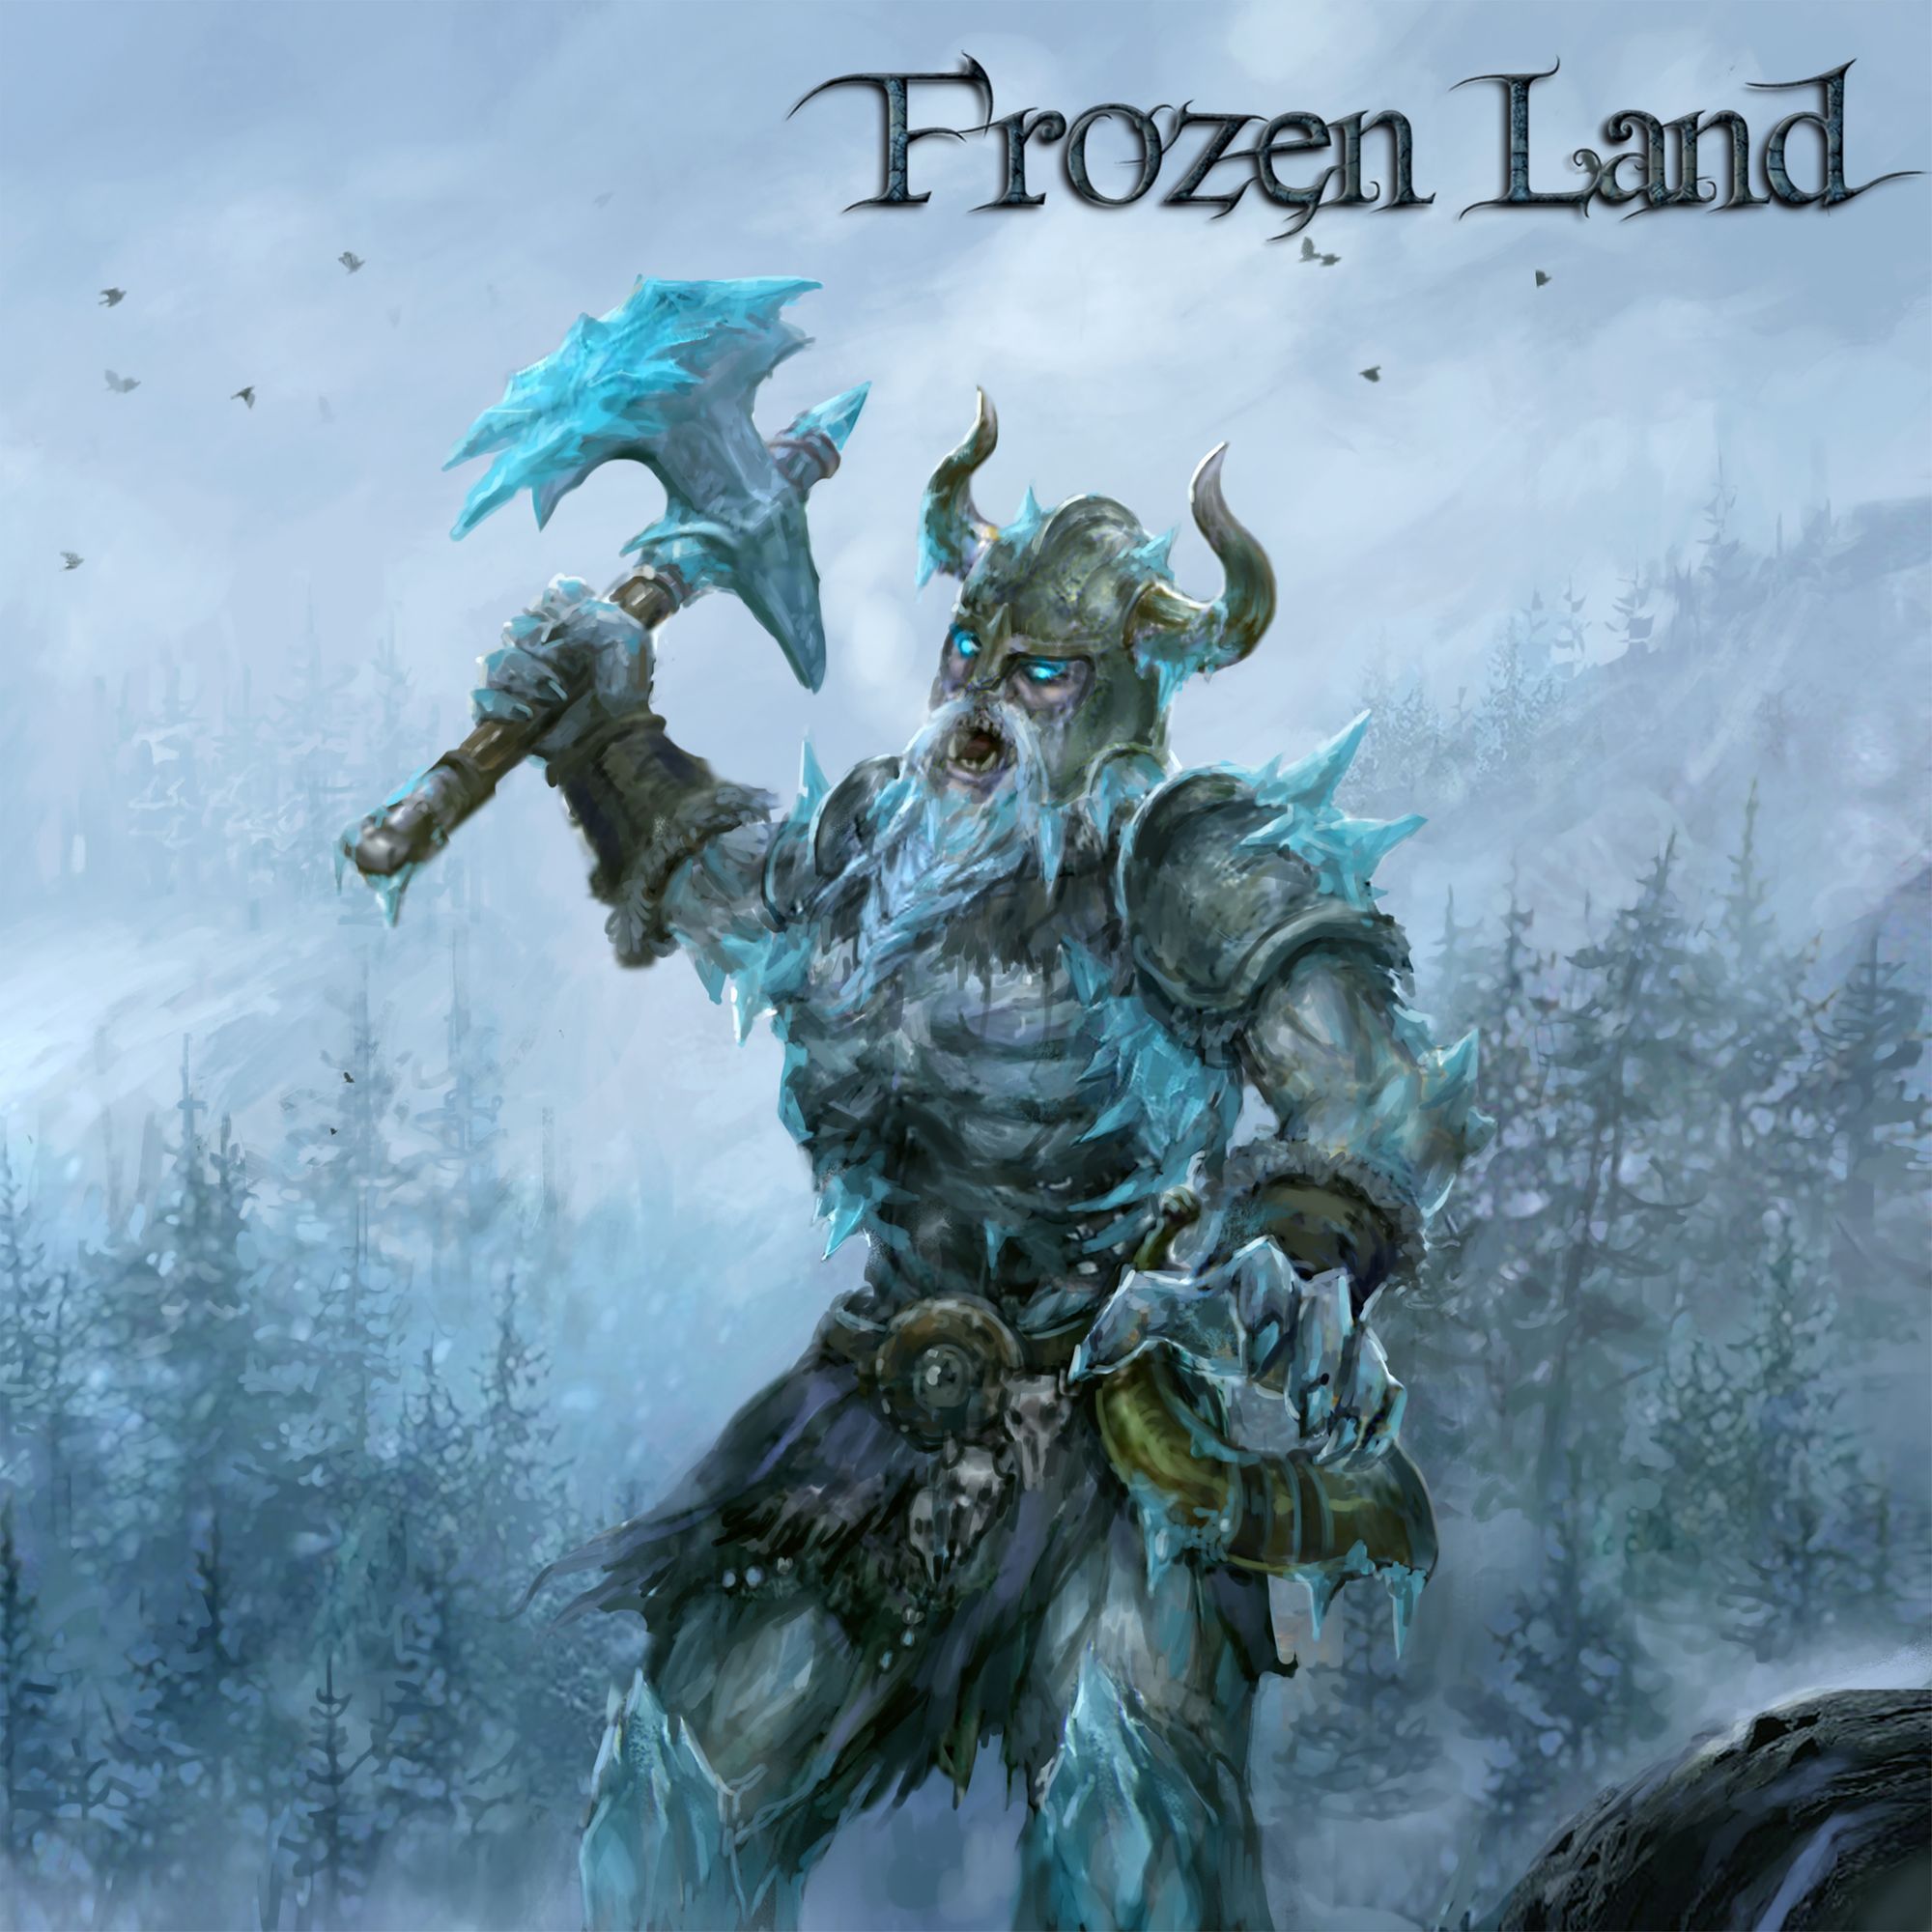 Frozen Land - Delusions of Grandeur (single)